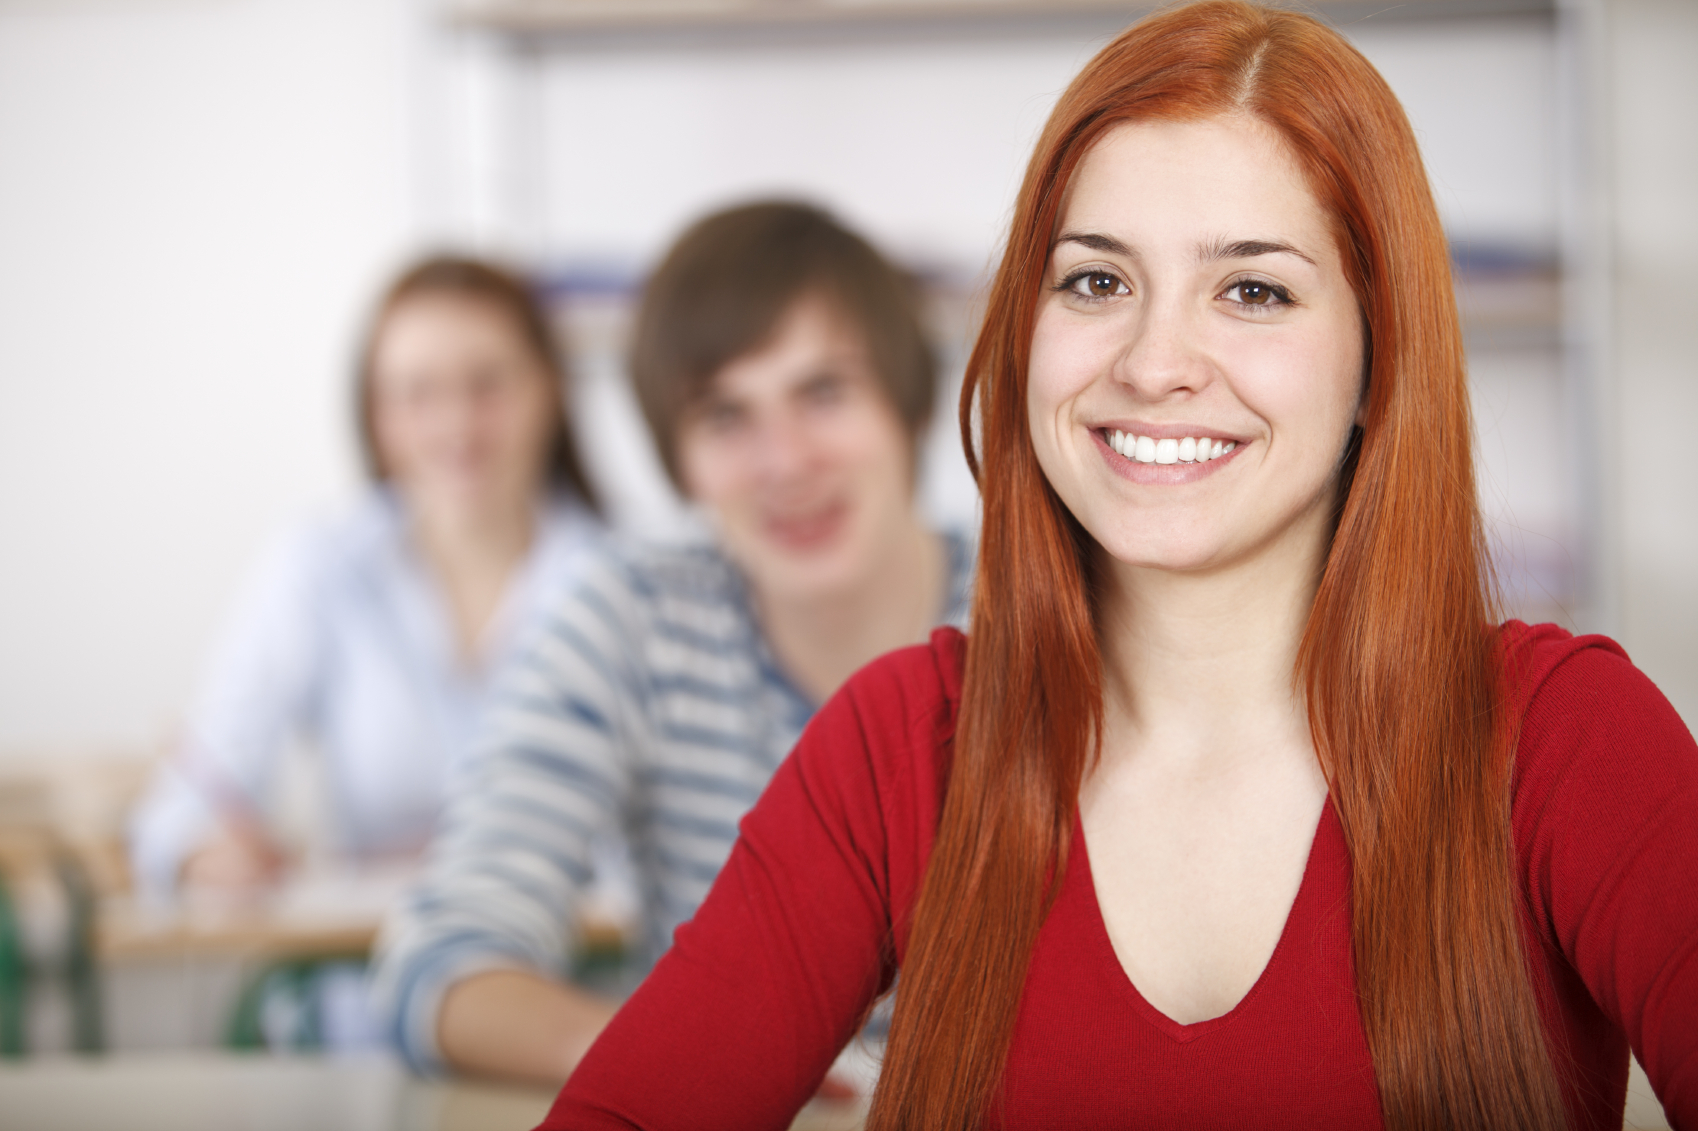 college scenario decision student smiling classroom female nextstepu choice don